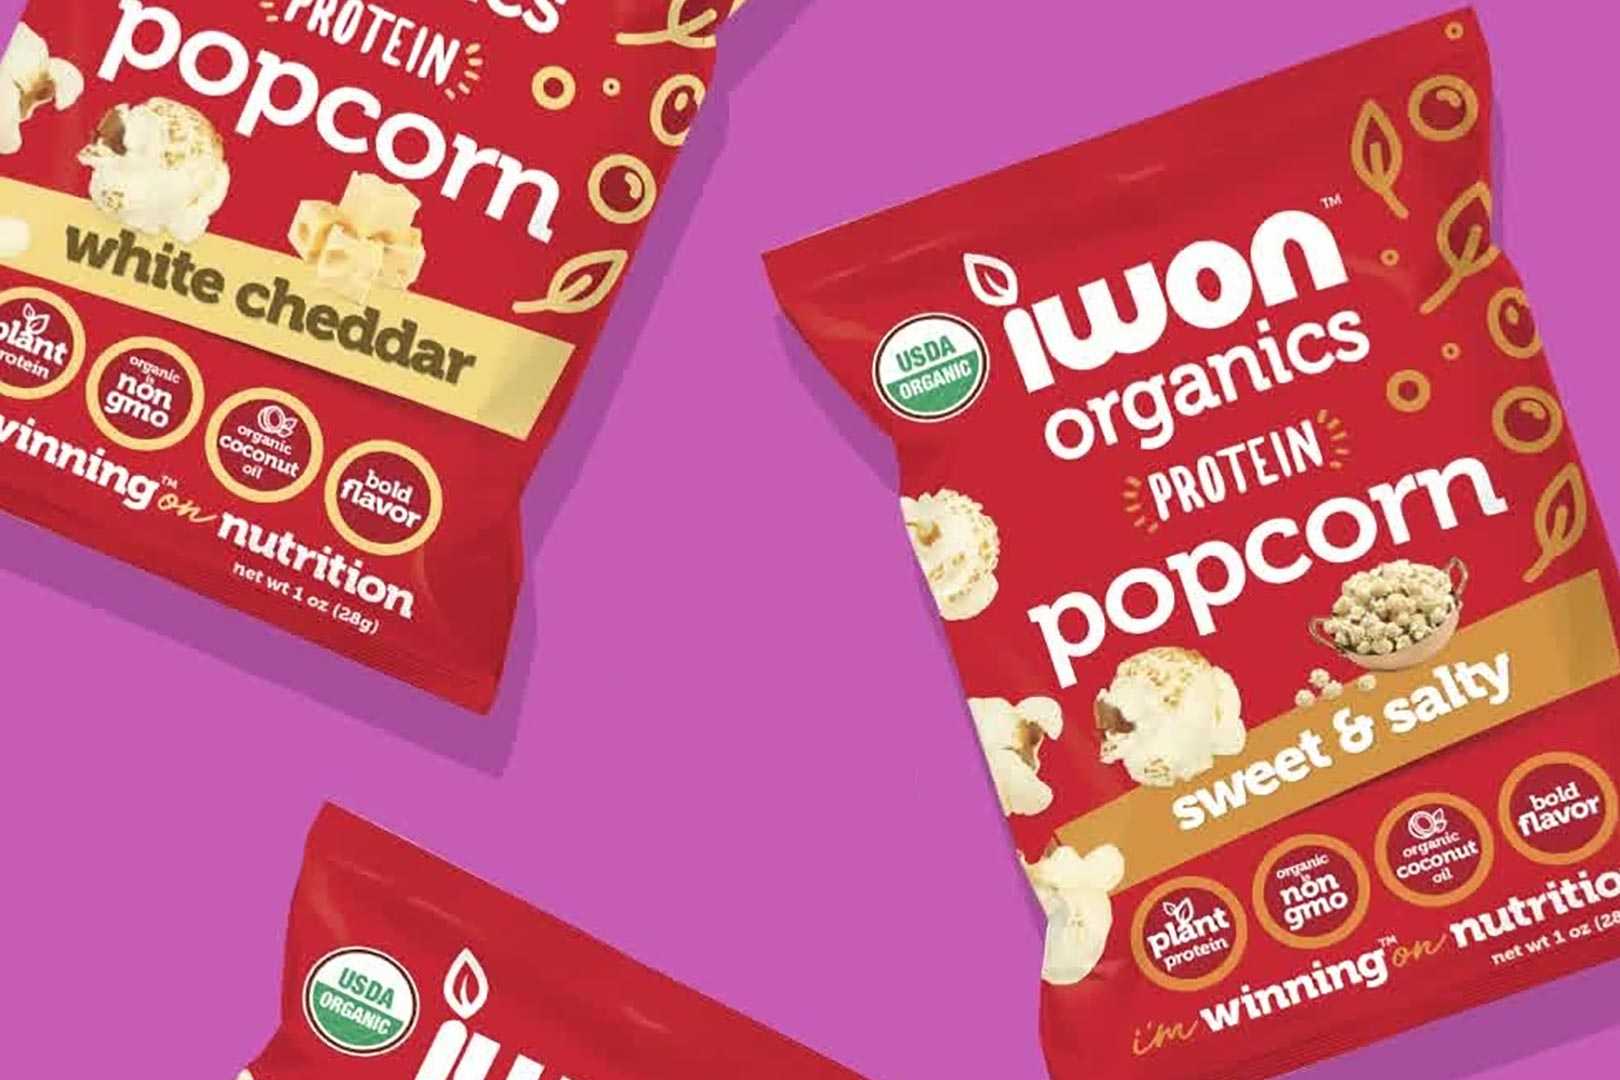 Iwon Organics Protein Popcorn